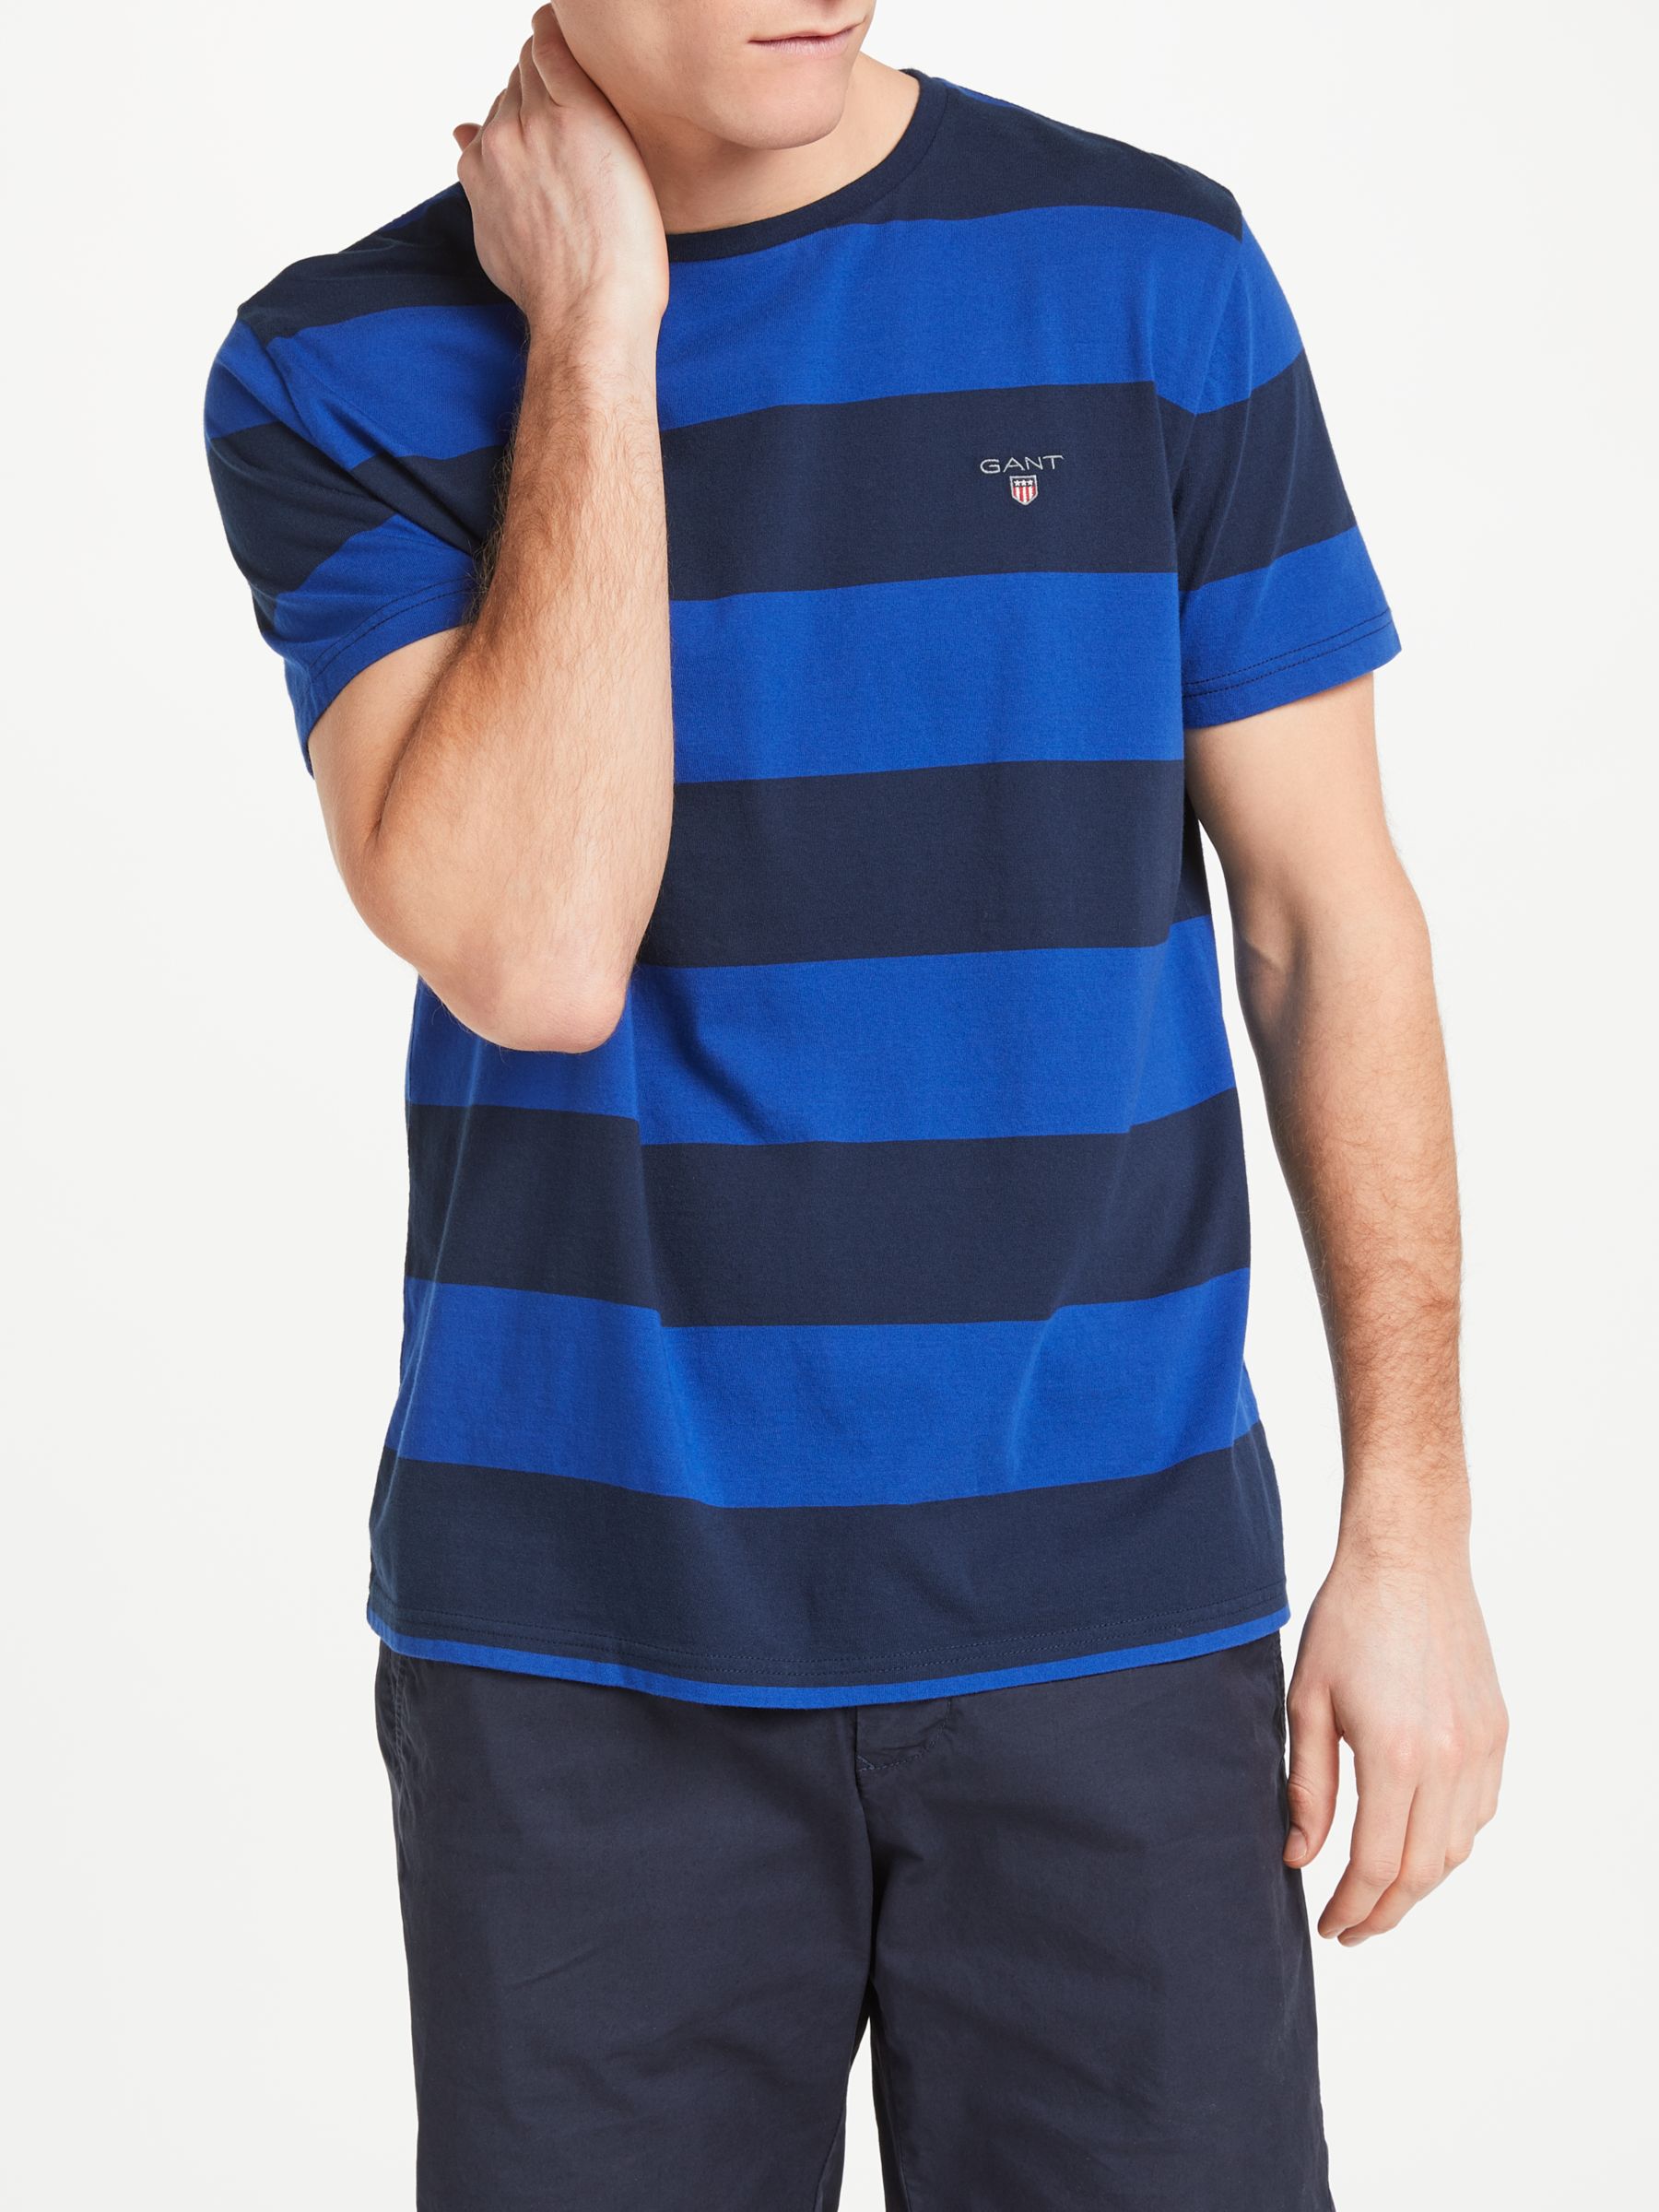 GANT Original Barstripe Cotton T-Shirt, Blue, XXL